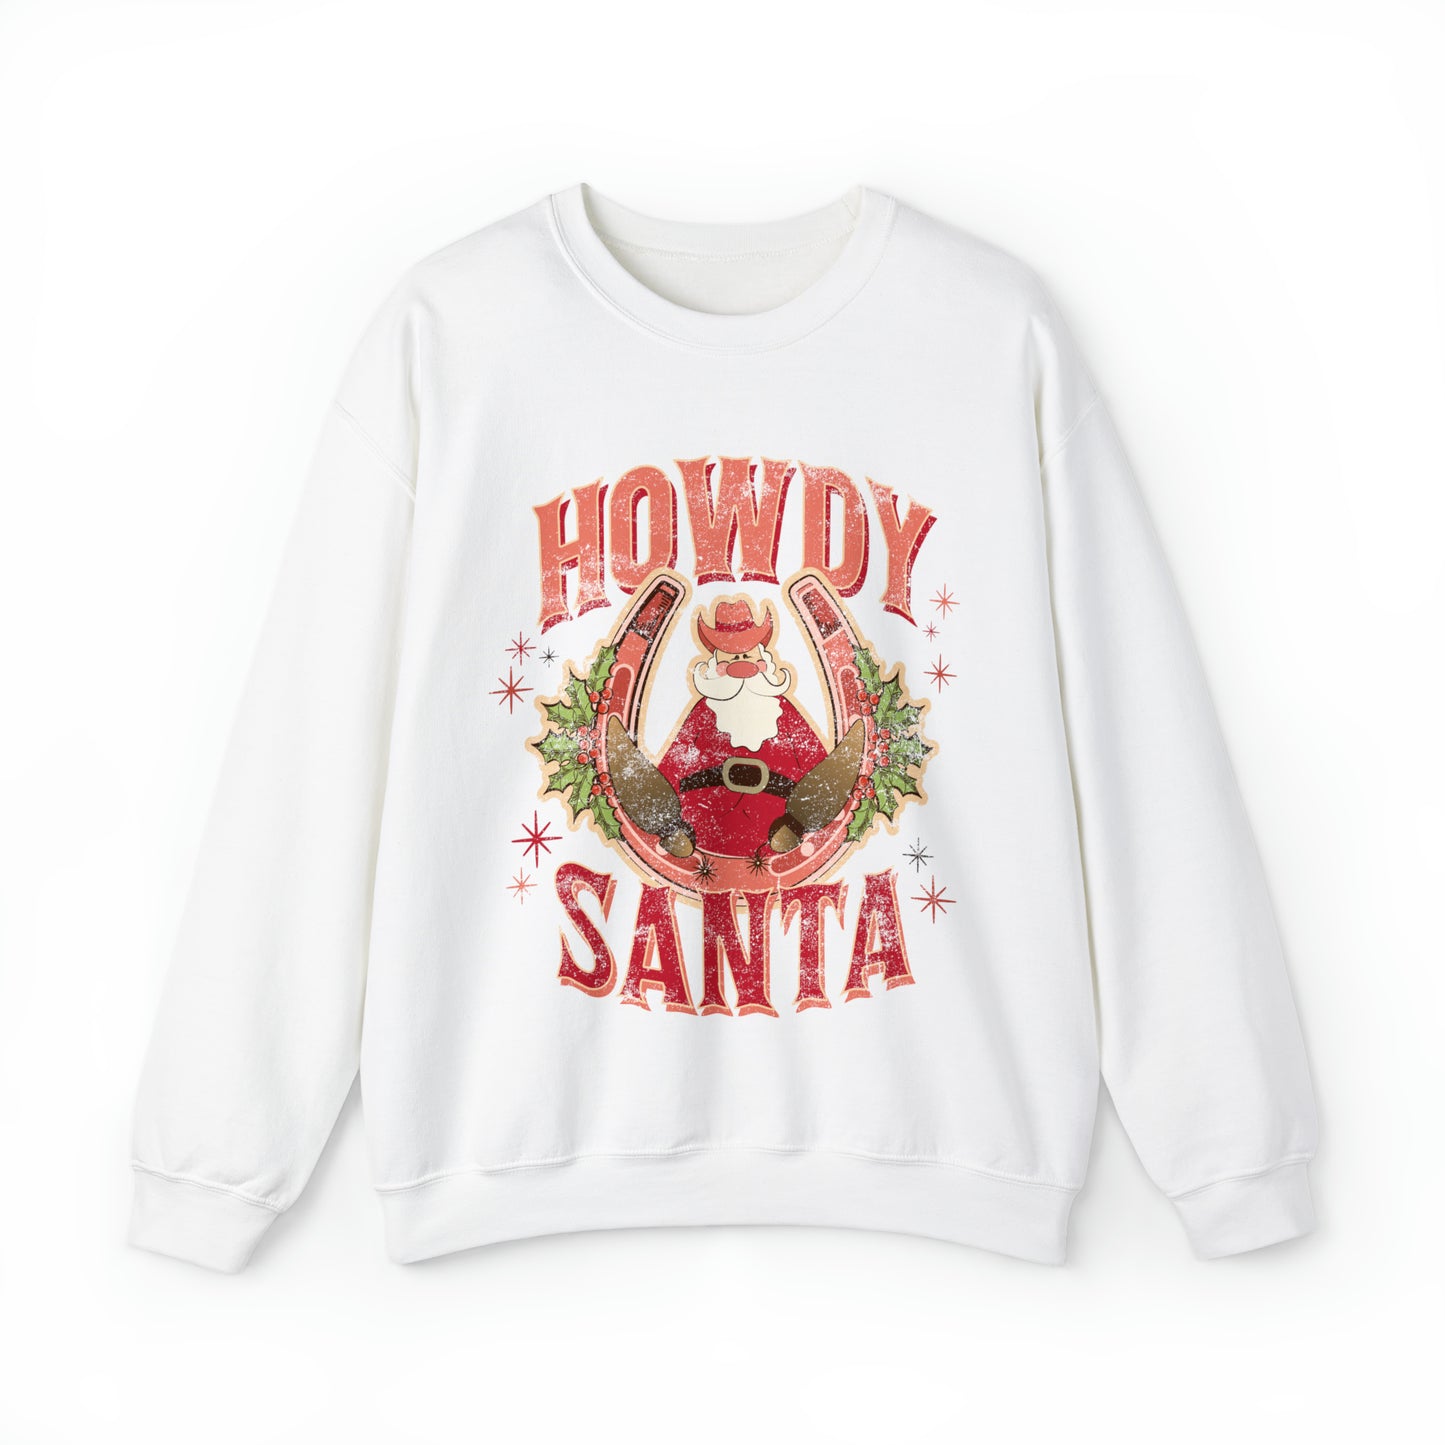 Howdy Santa Sweatshirt